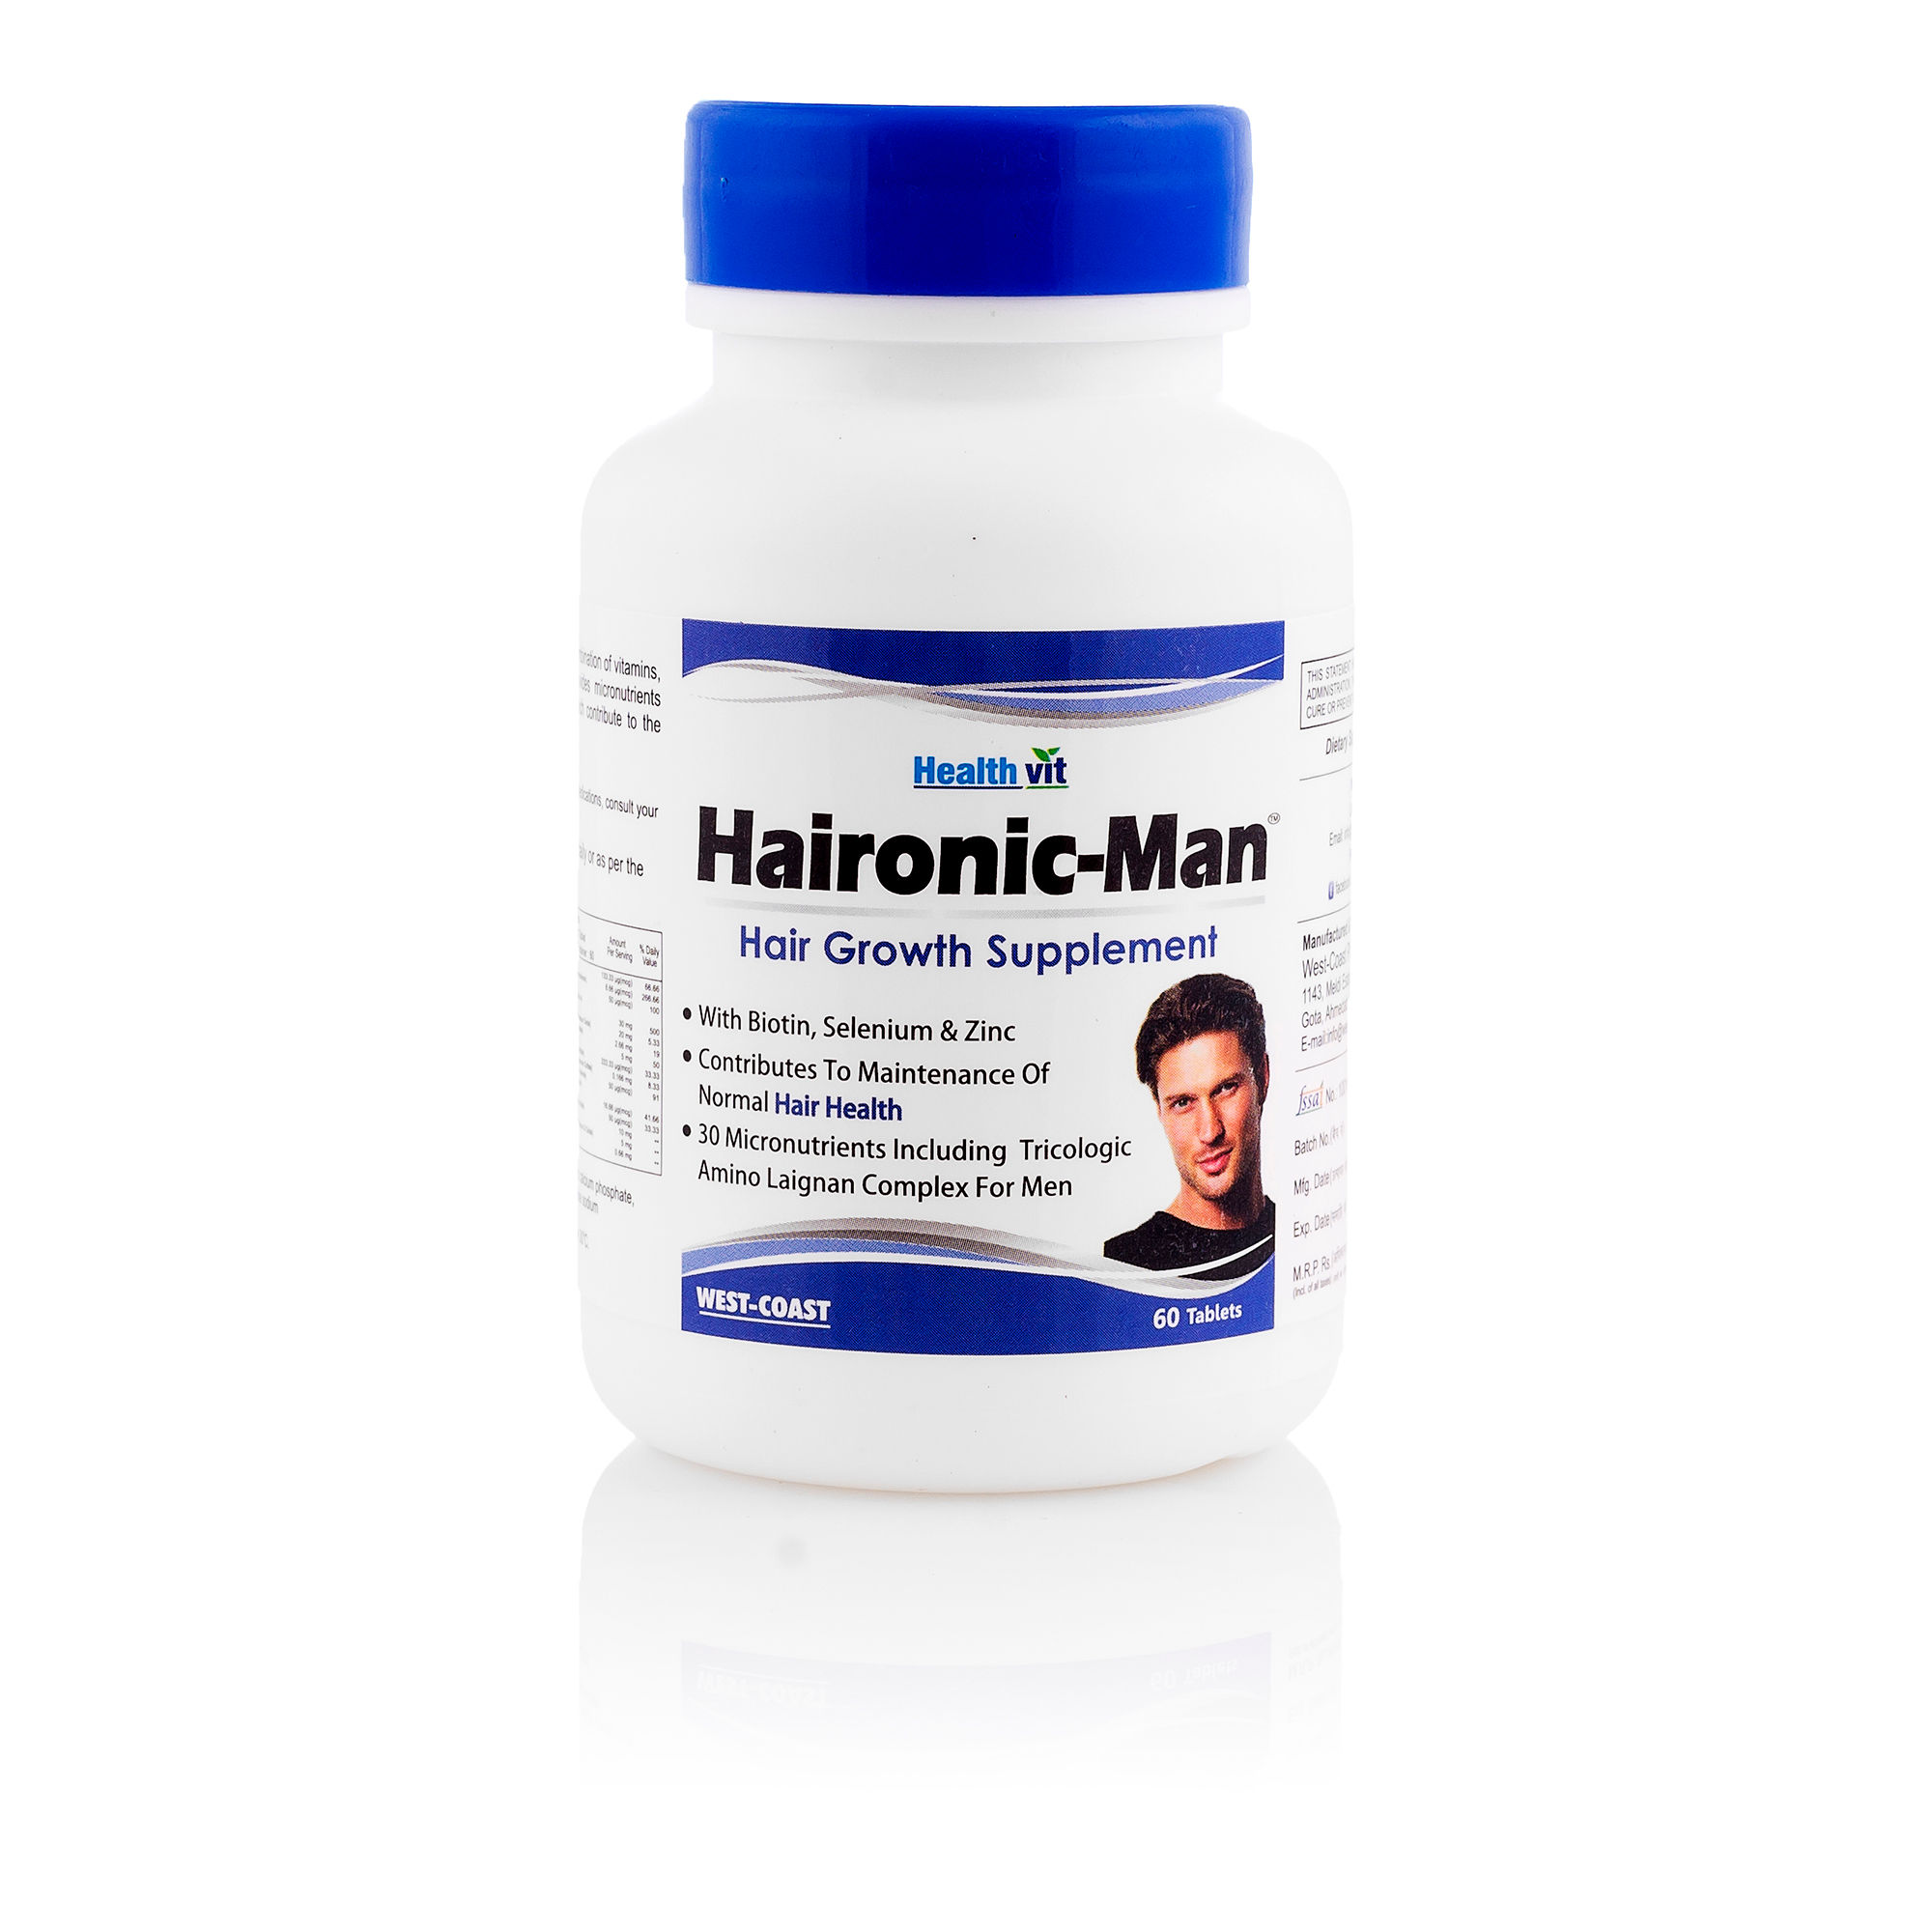 HealthVit Haironic-Man Hair Growth Supplement 60 Tablets